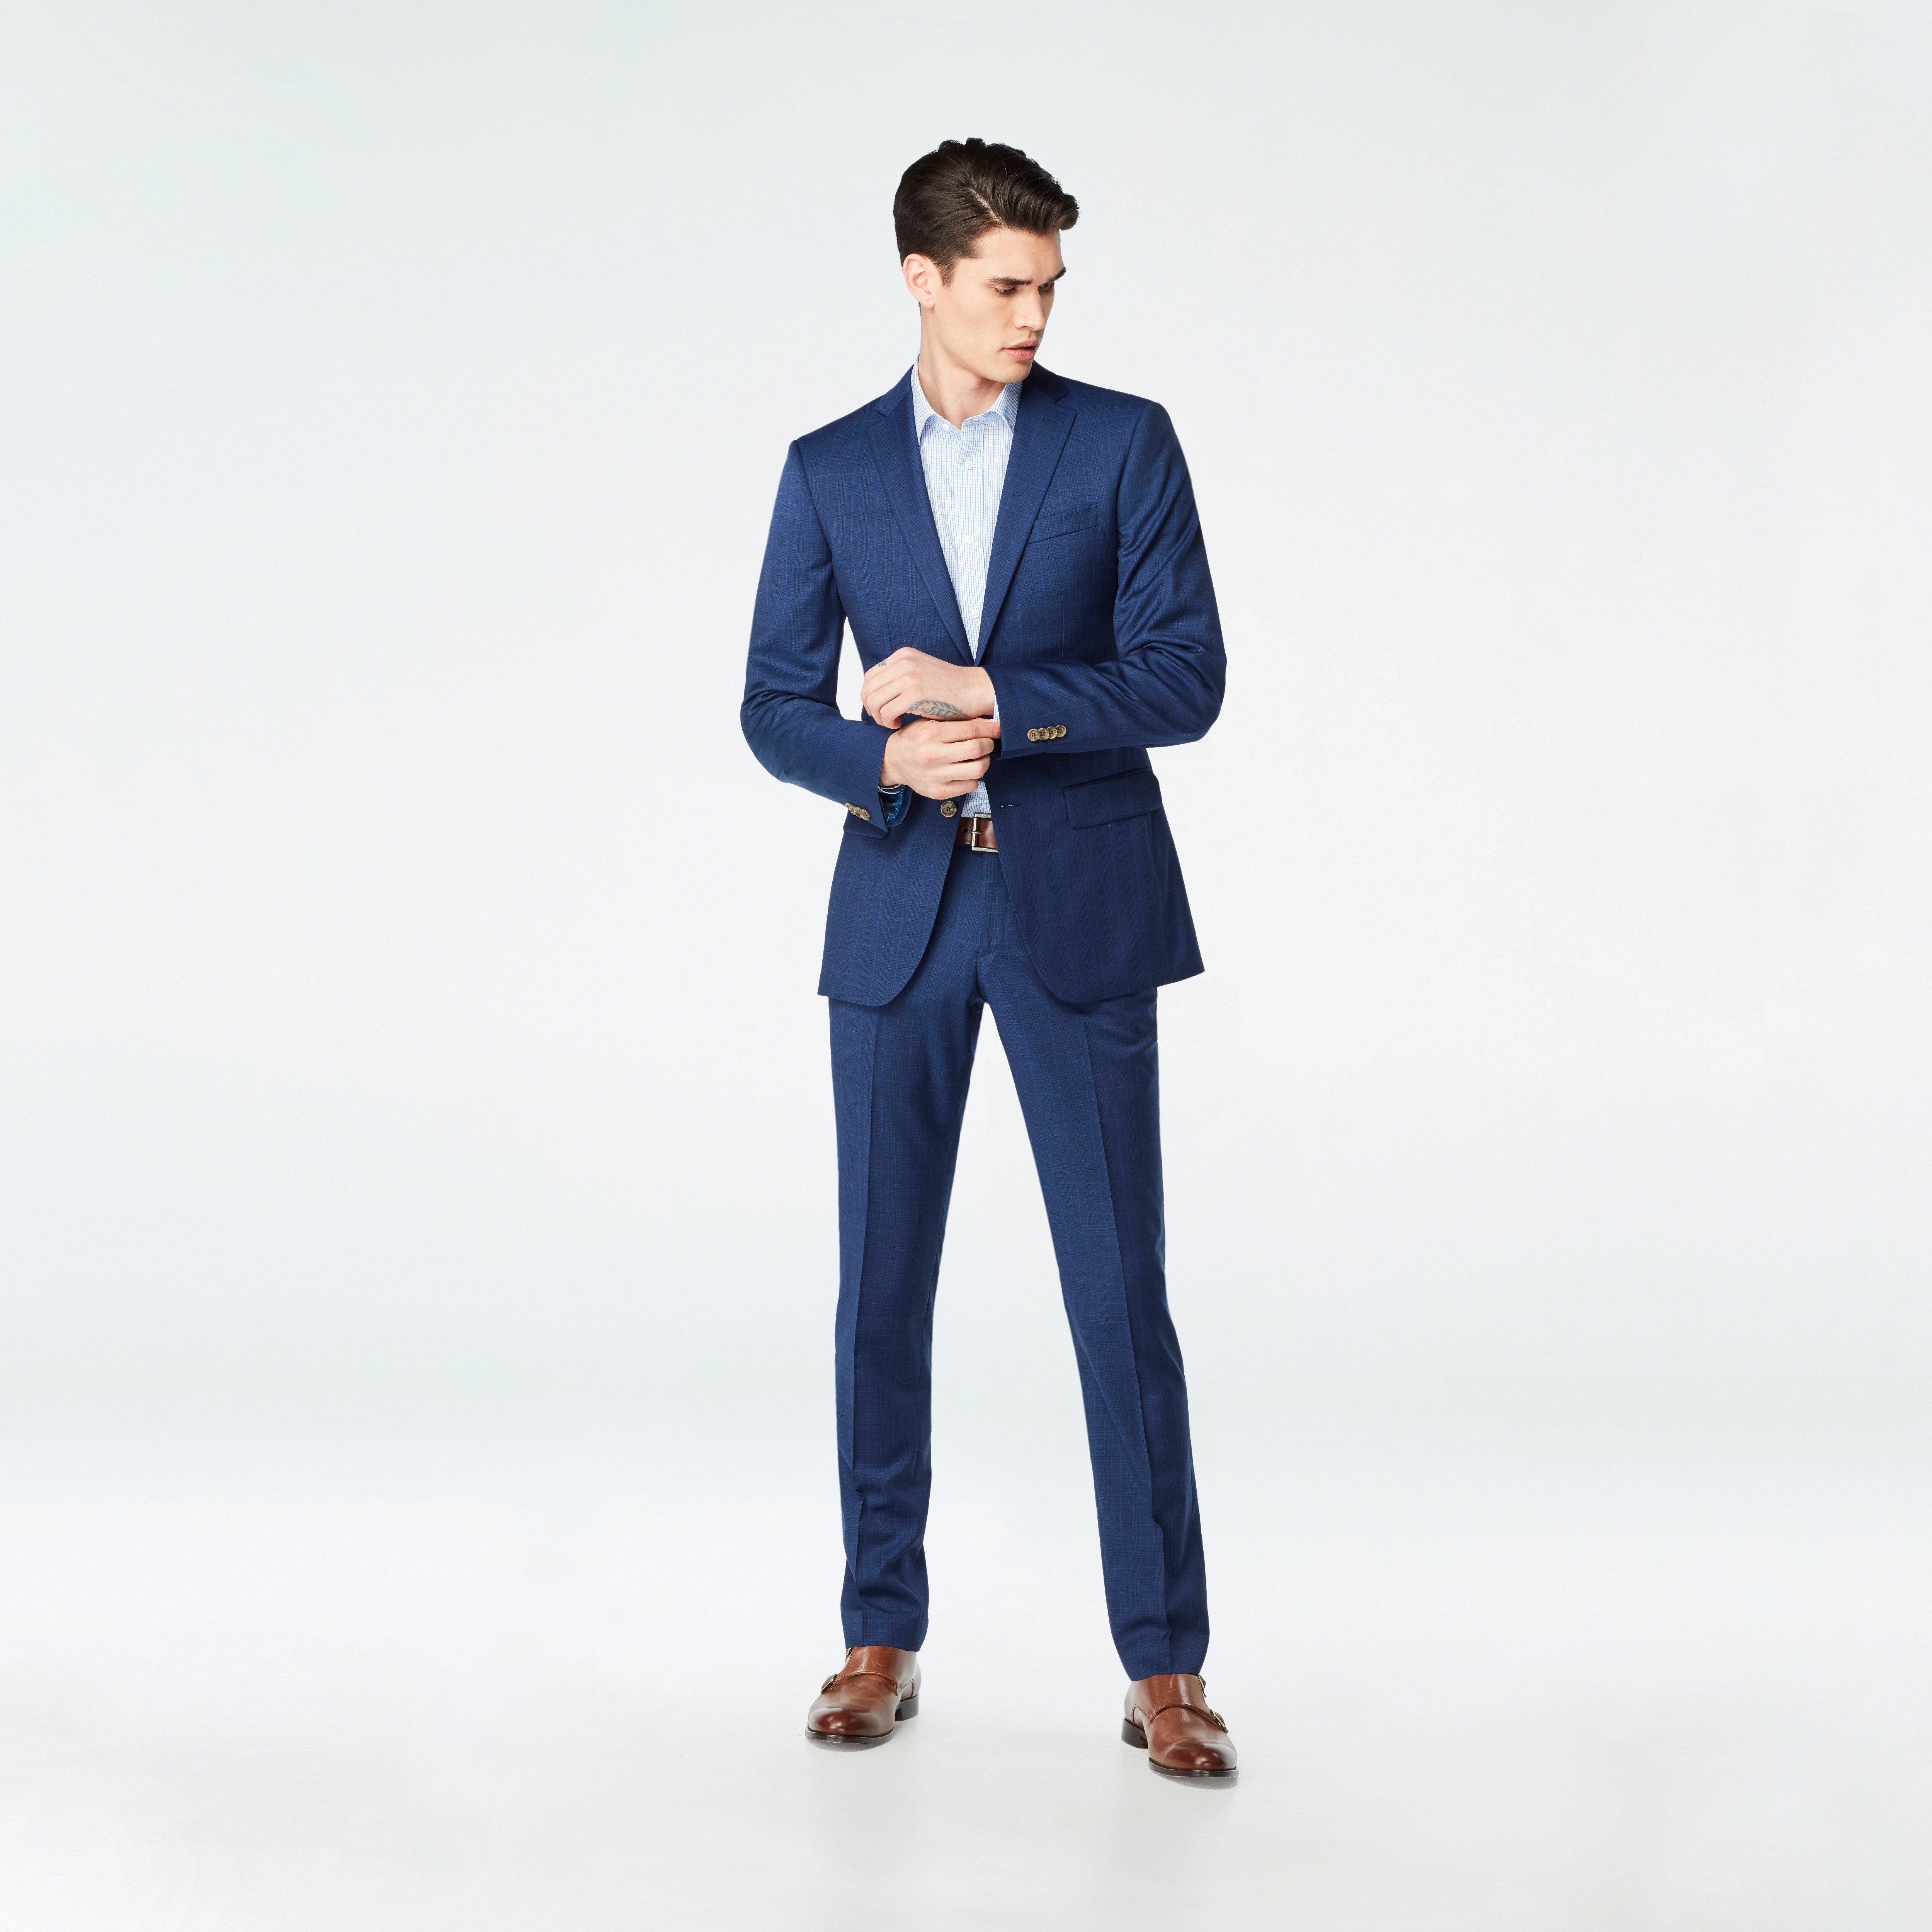 Shirt And Suit Combinations For Men ⋆ Best Fashion Blog For Men -  TheUnstitchd.com